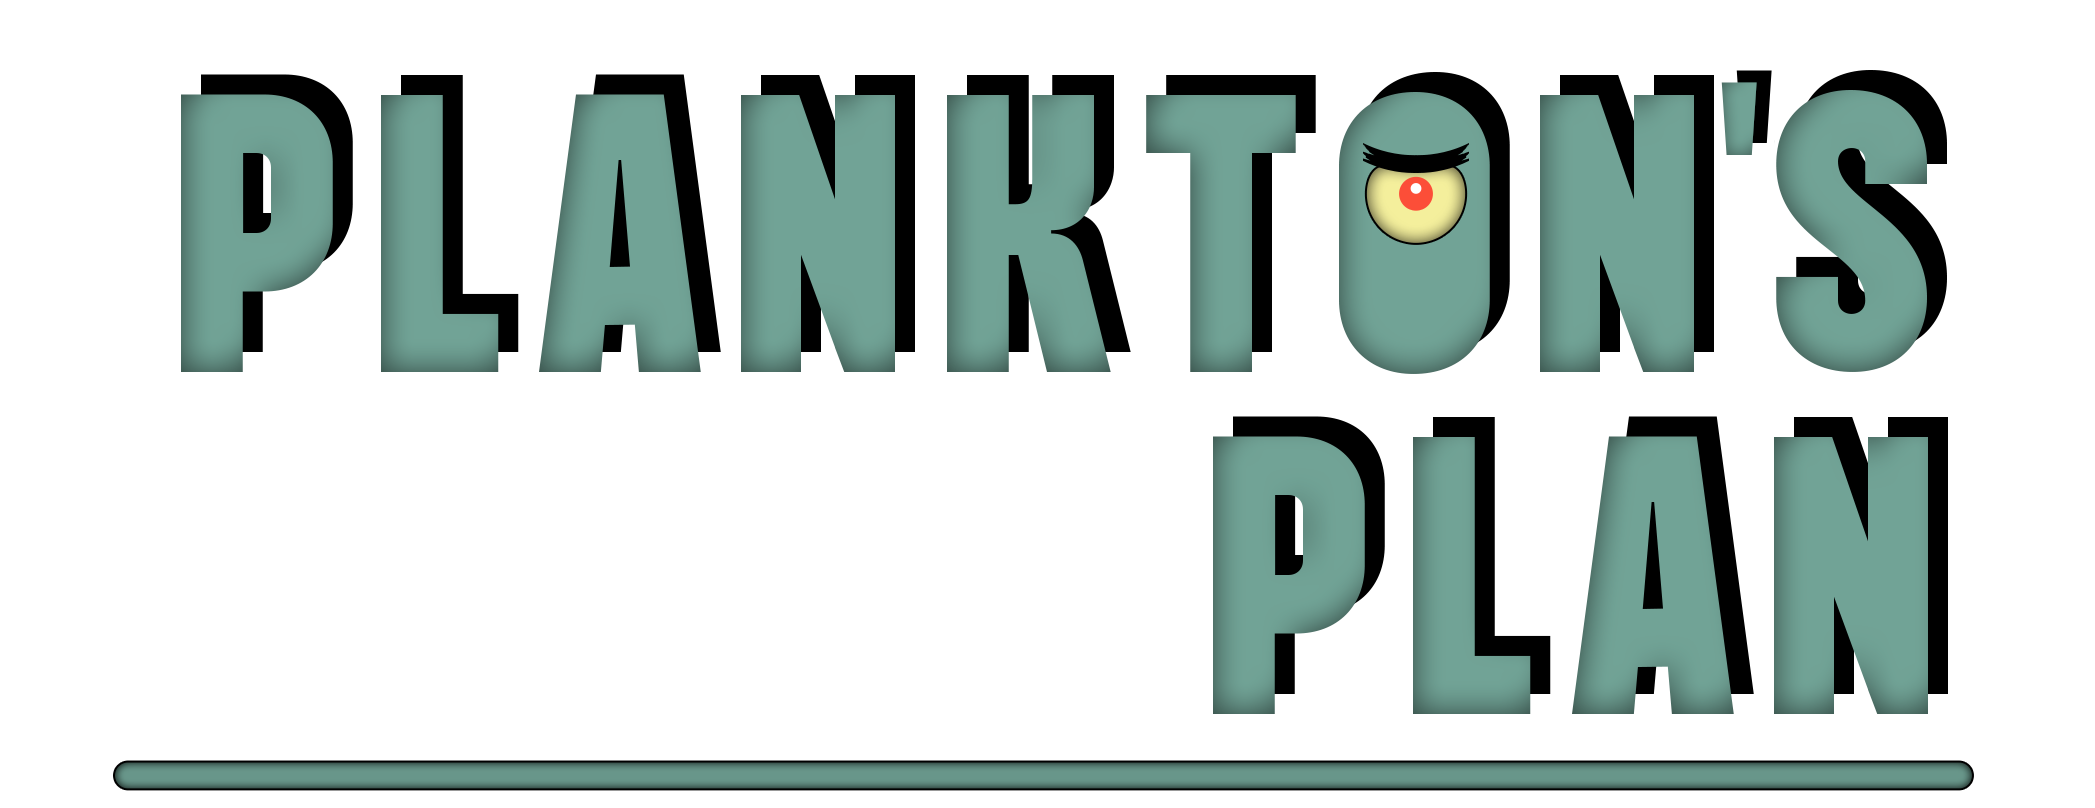 PLANKTON'S PLAN -  SpongeBob game